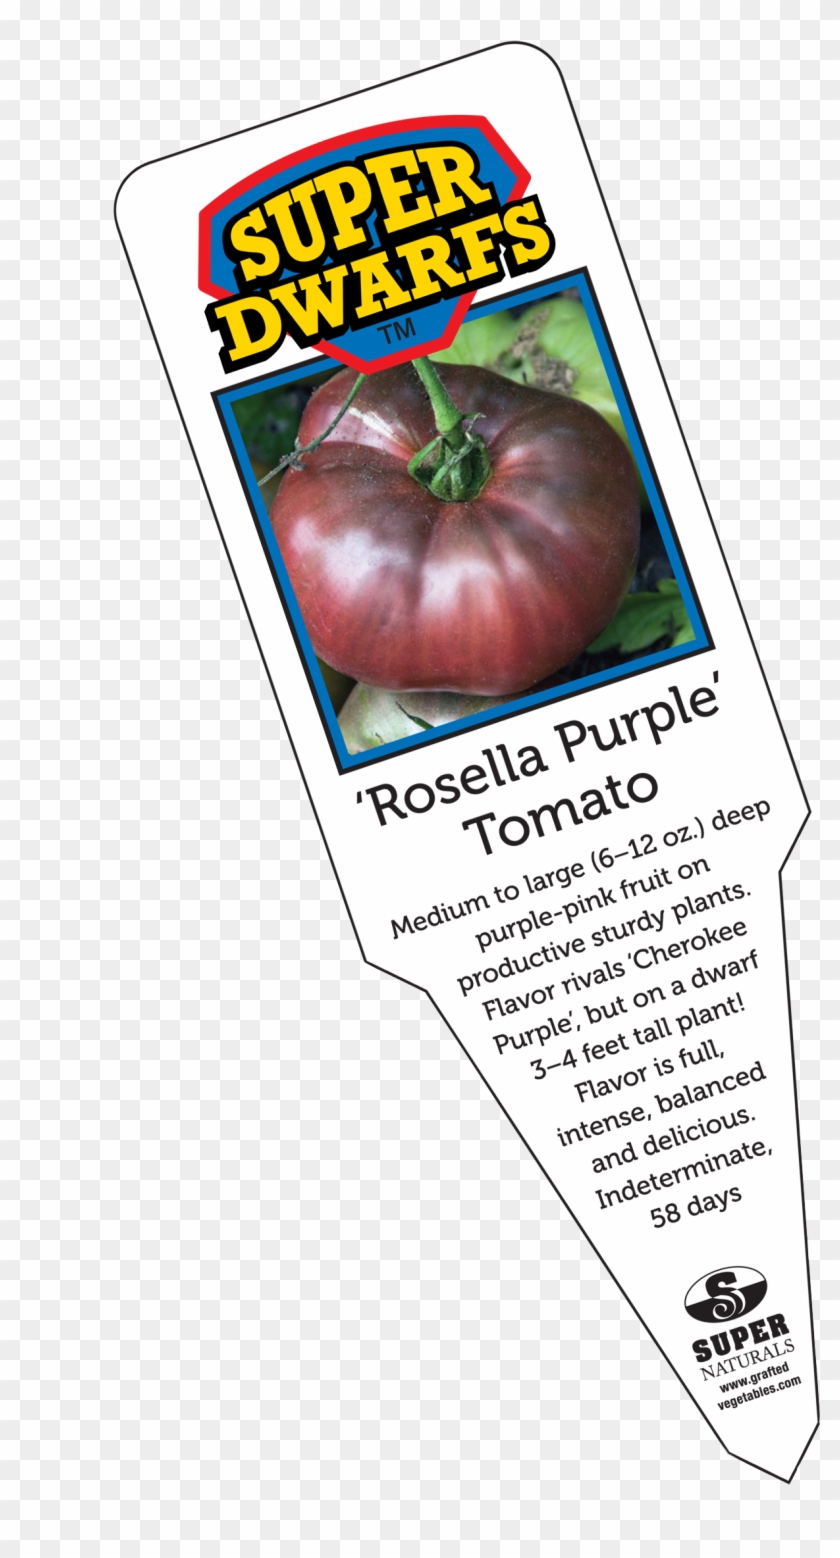 Rosella Purple Tomato Label - Natural Foods Clipart #2318404